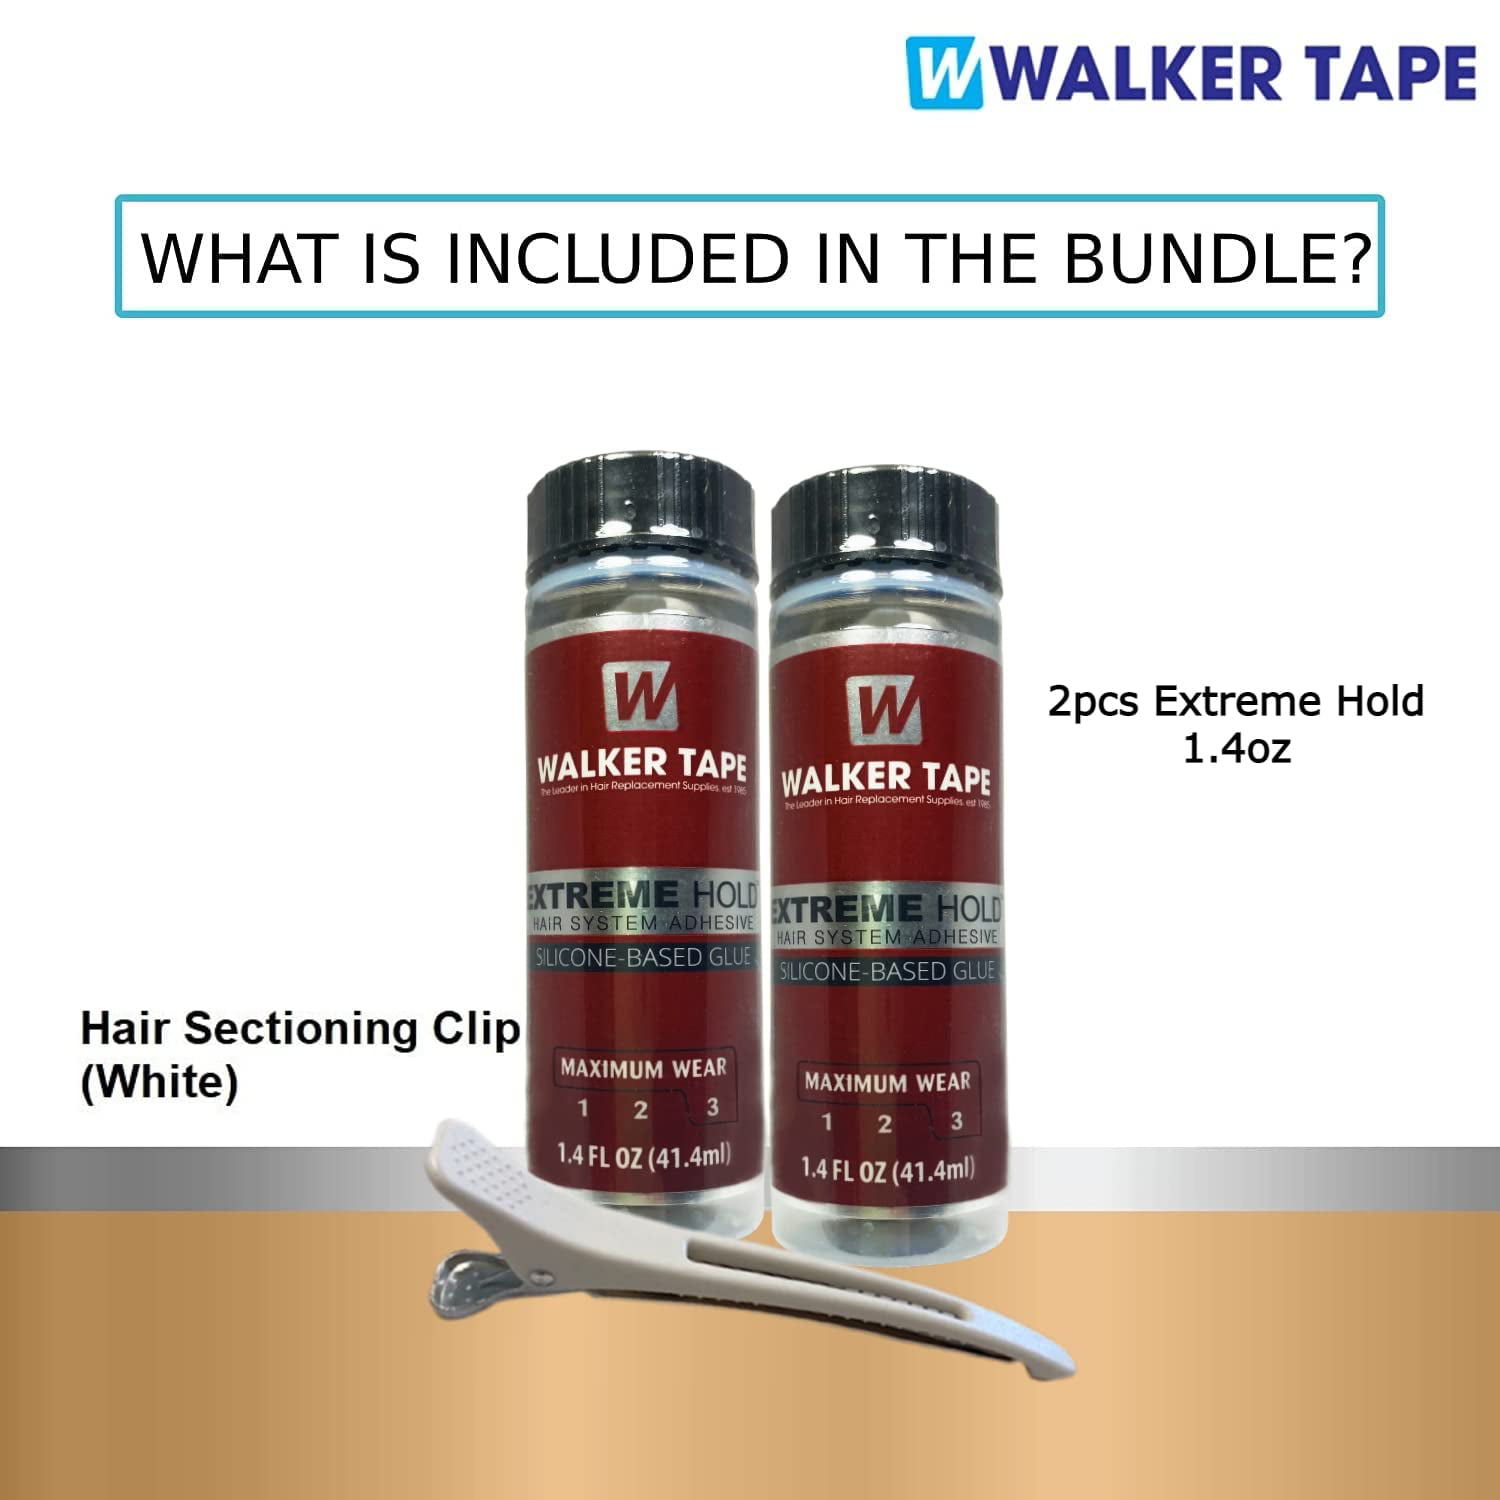 Waterproof Professional Hair Bonding Glue For Fixing Hair Extensions  2Pcs/Set Hair Bond Remover For Salon Black Liquid Adhesive